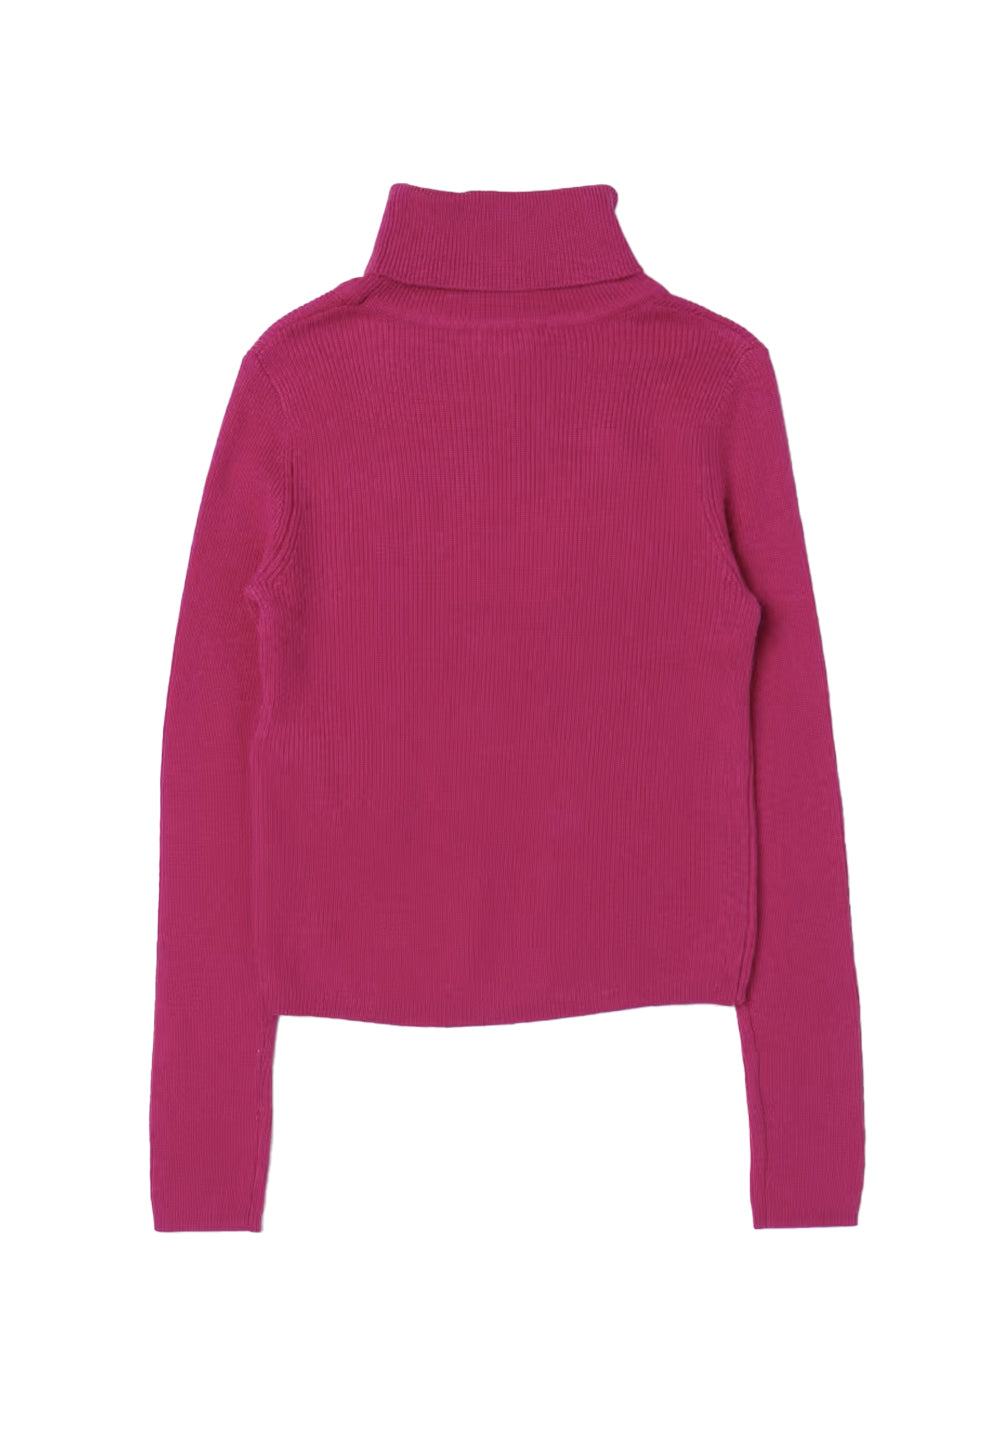 Fuchsia turtleneck sweater for girls